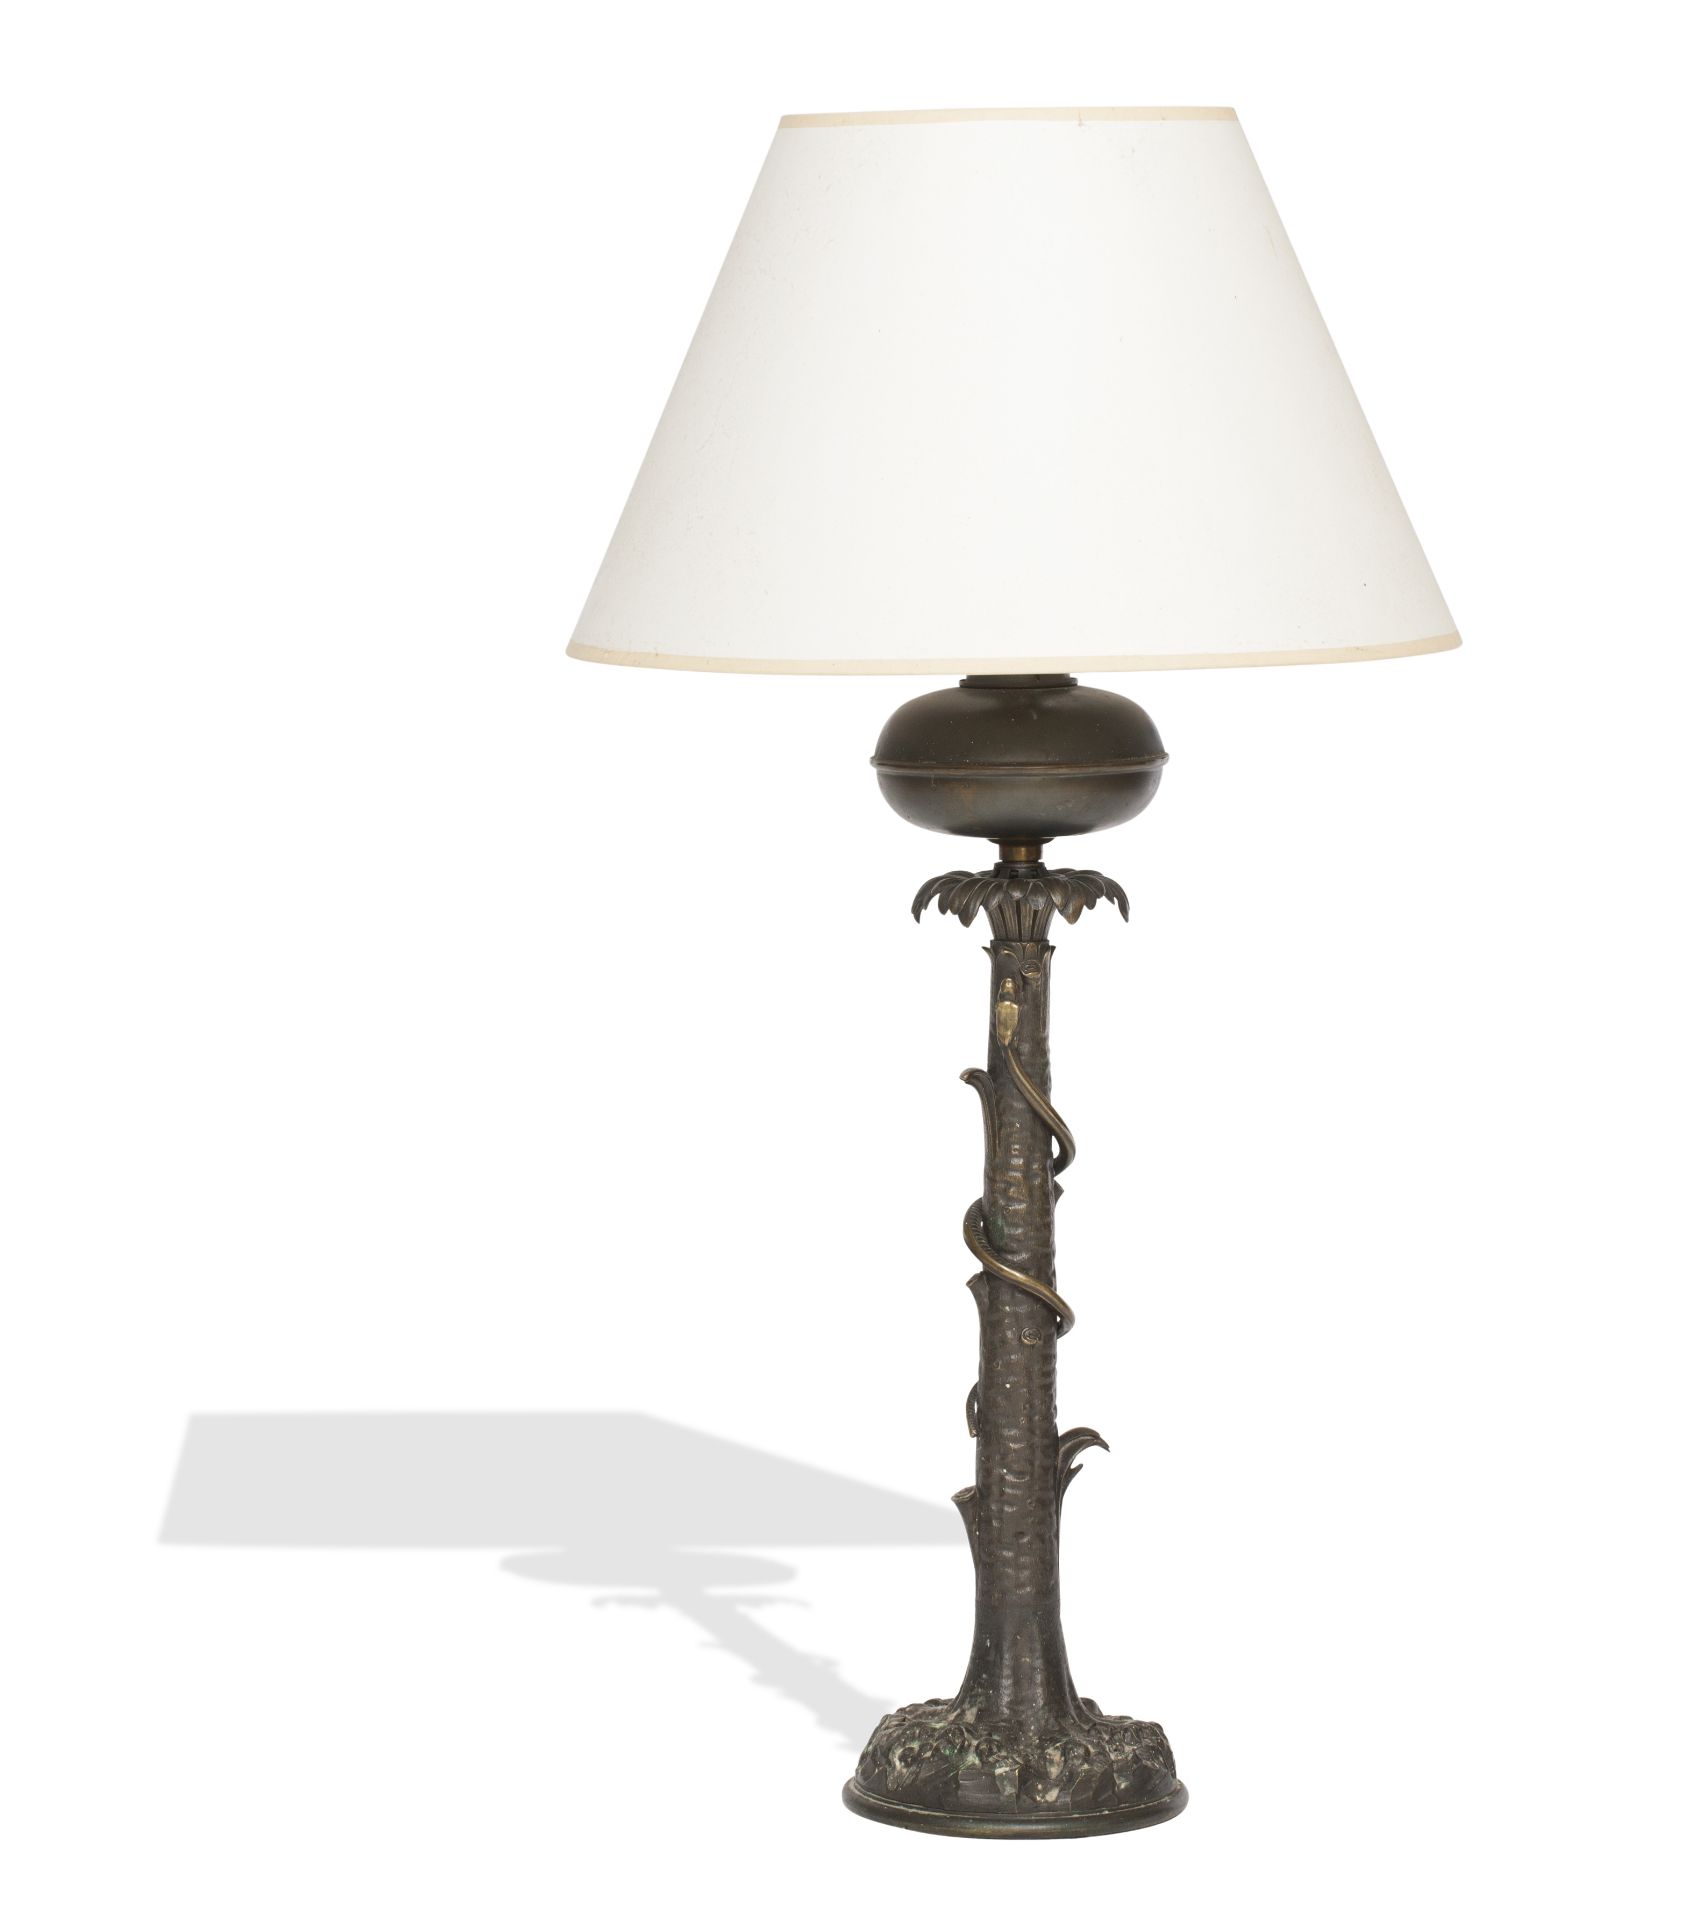 A 19th century brass paraffin lamp